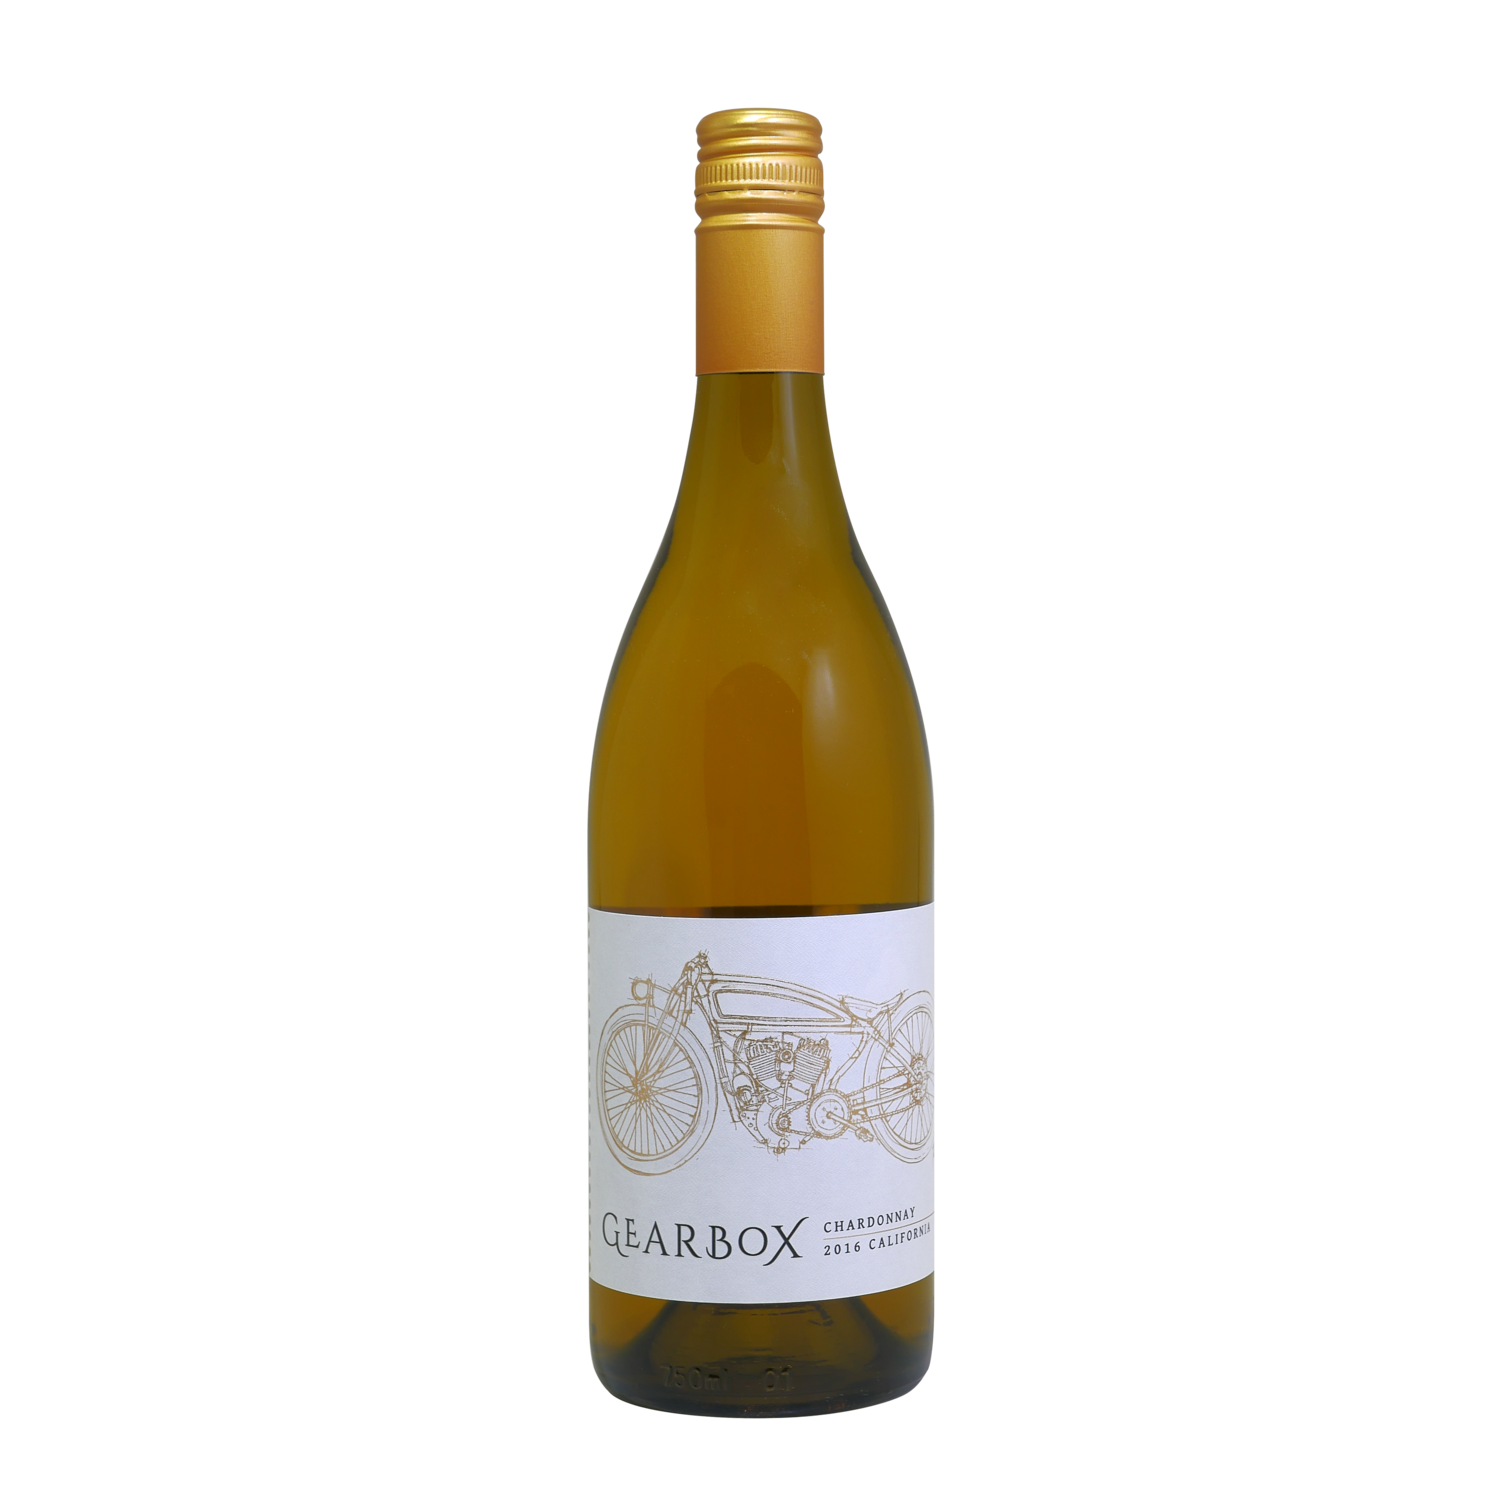 GEARBOX Chardonnay 2016